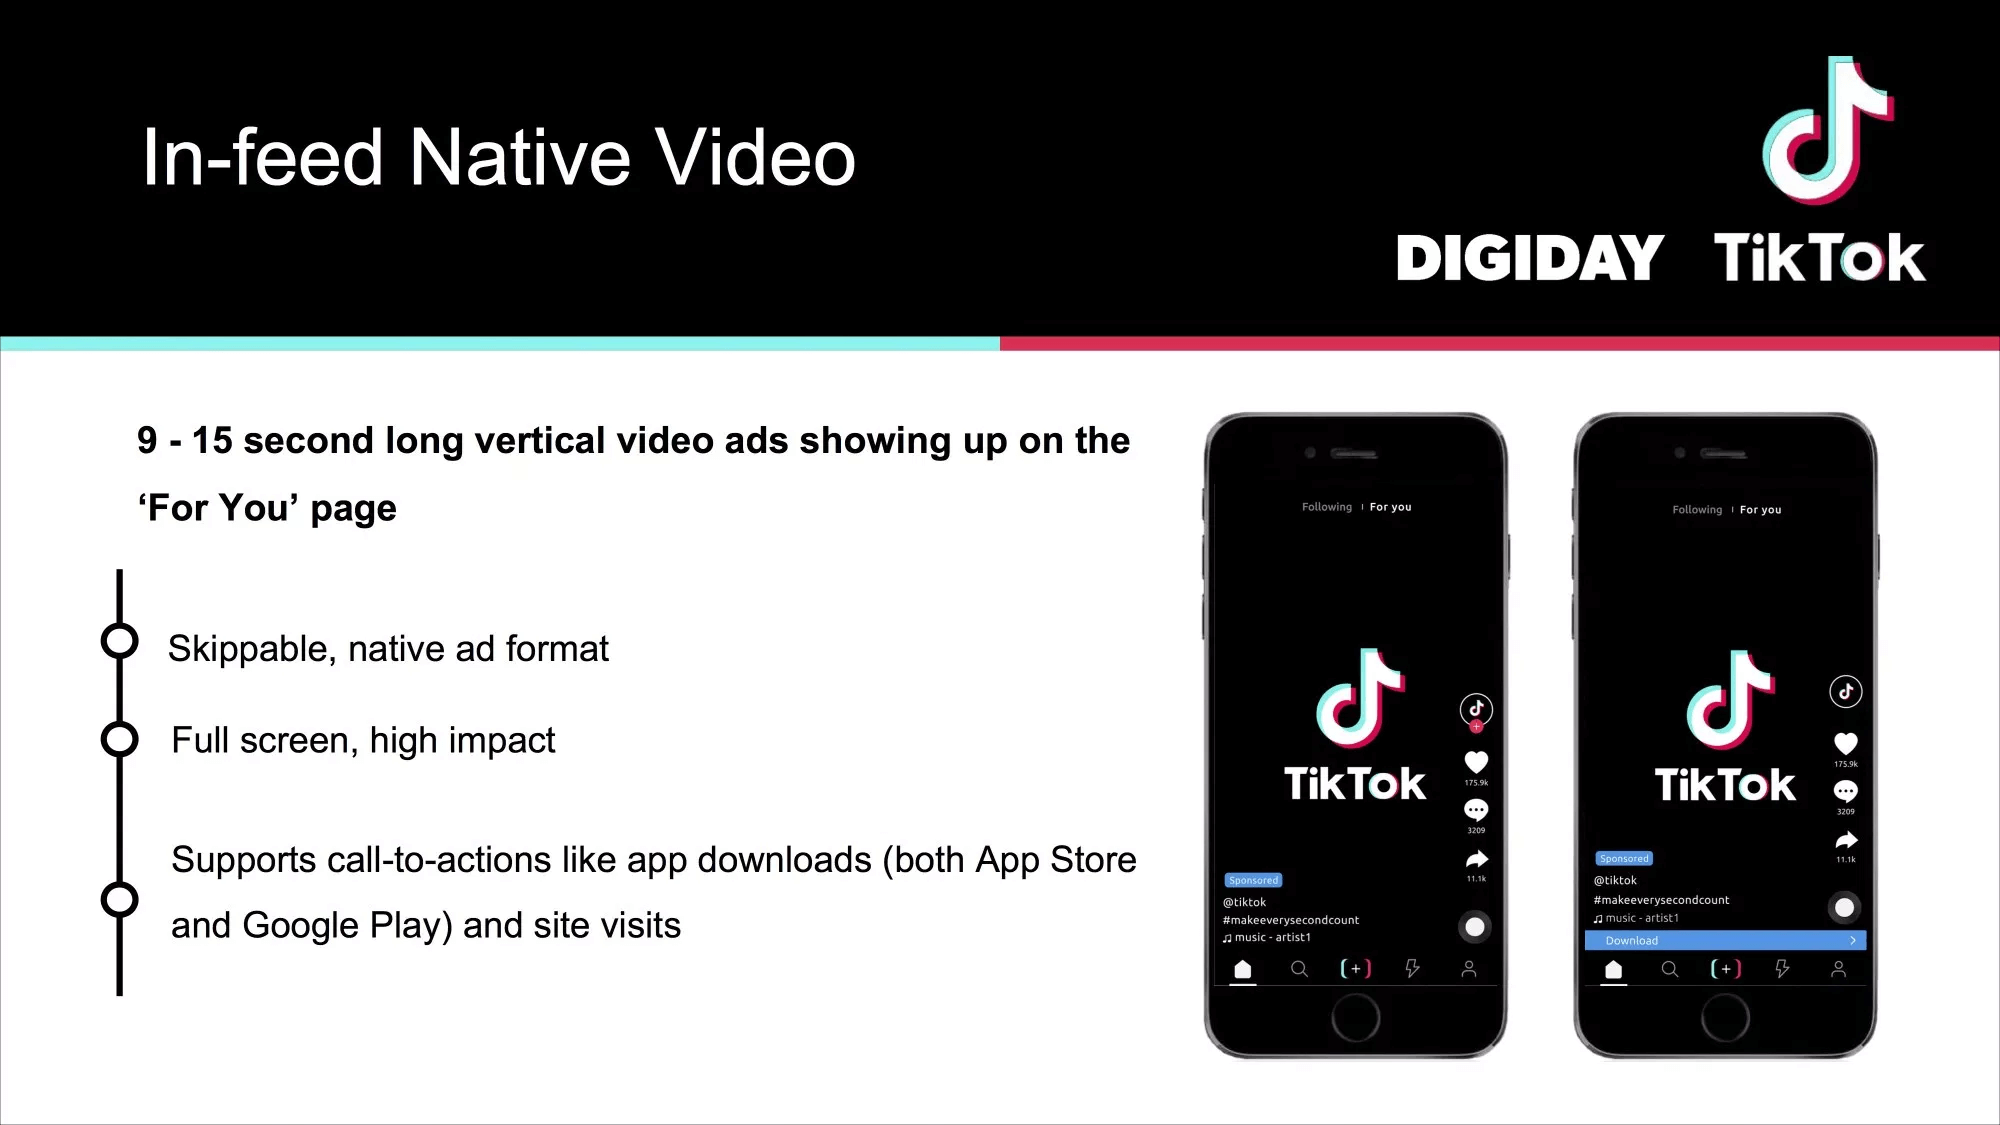 TikTok Native Video ads